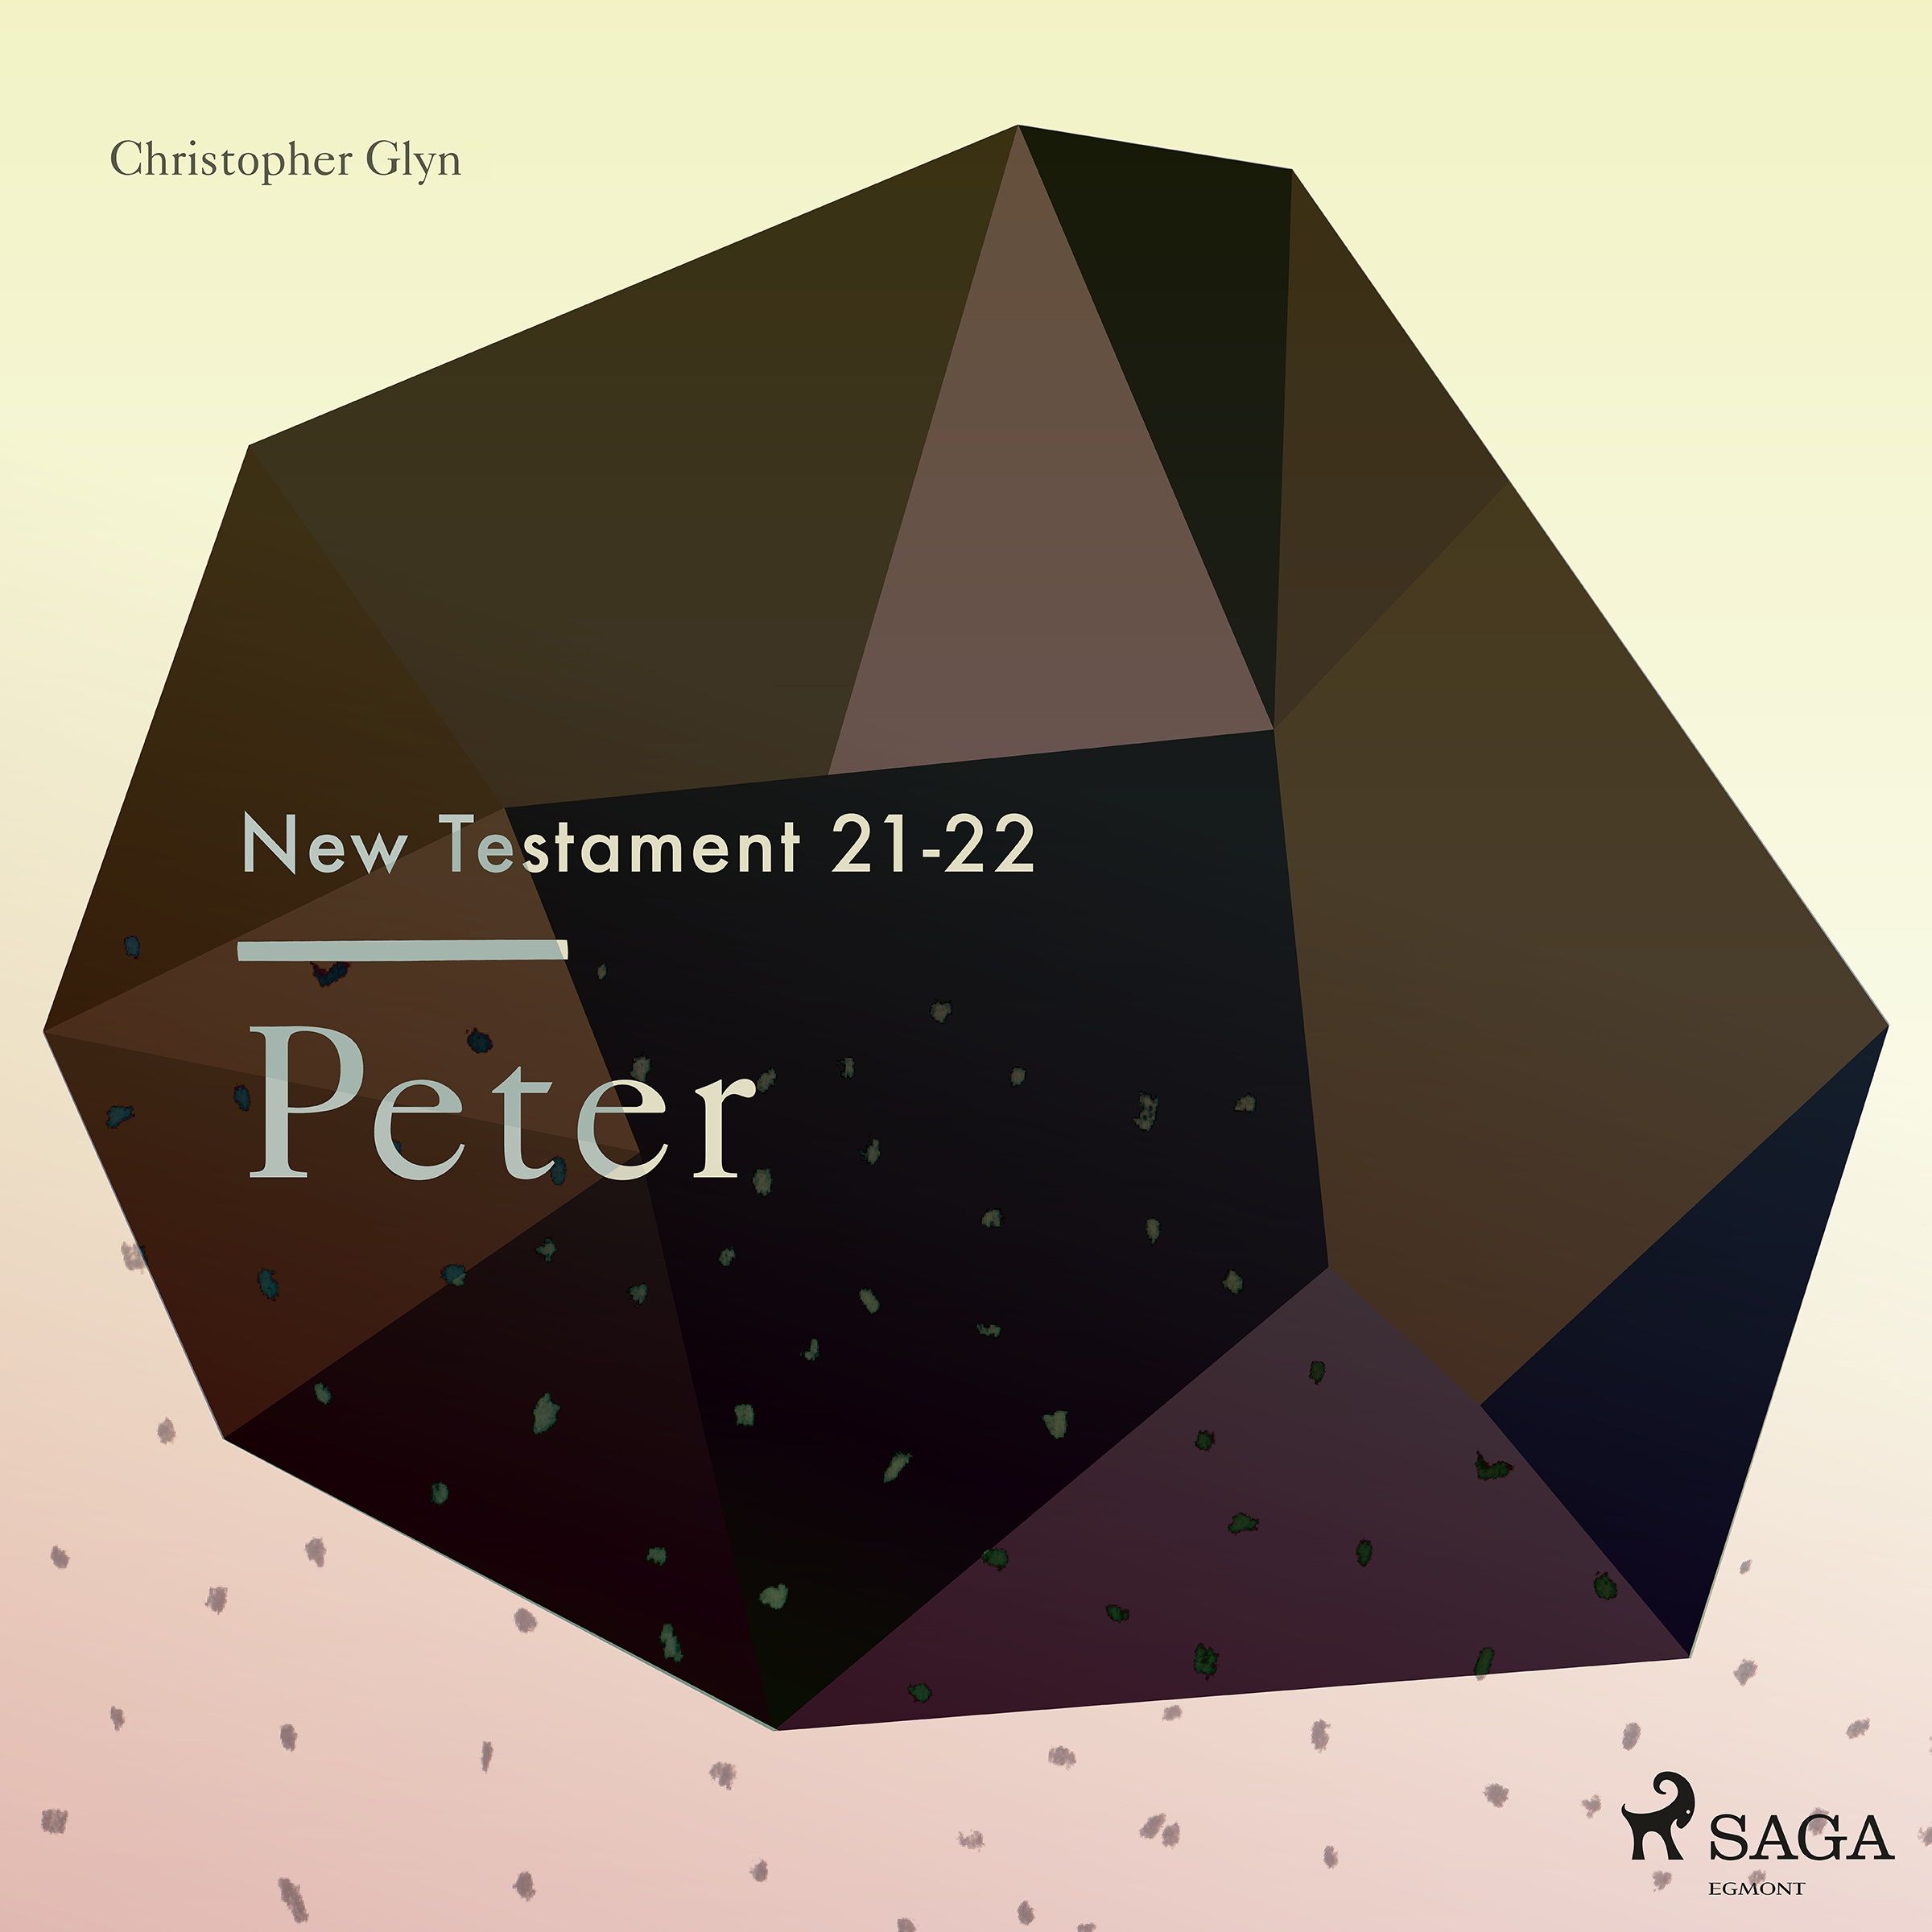 The New Testament 21-22 - Peter, ljudbok av Christopher Glyn